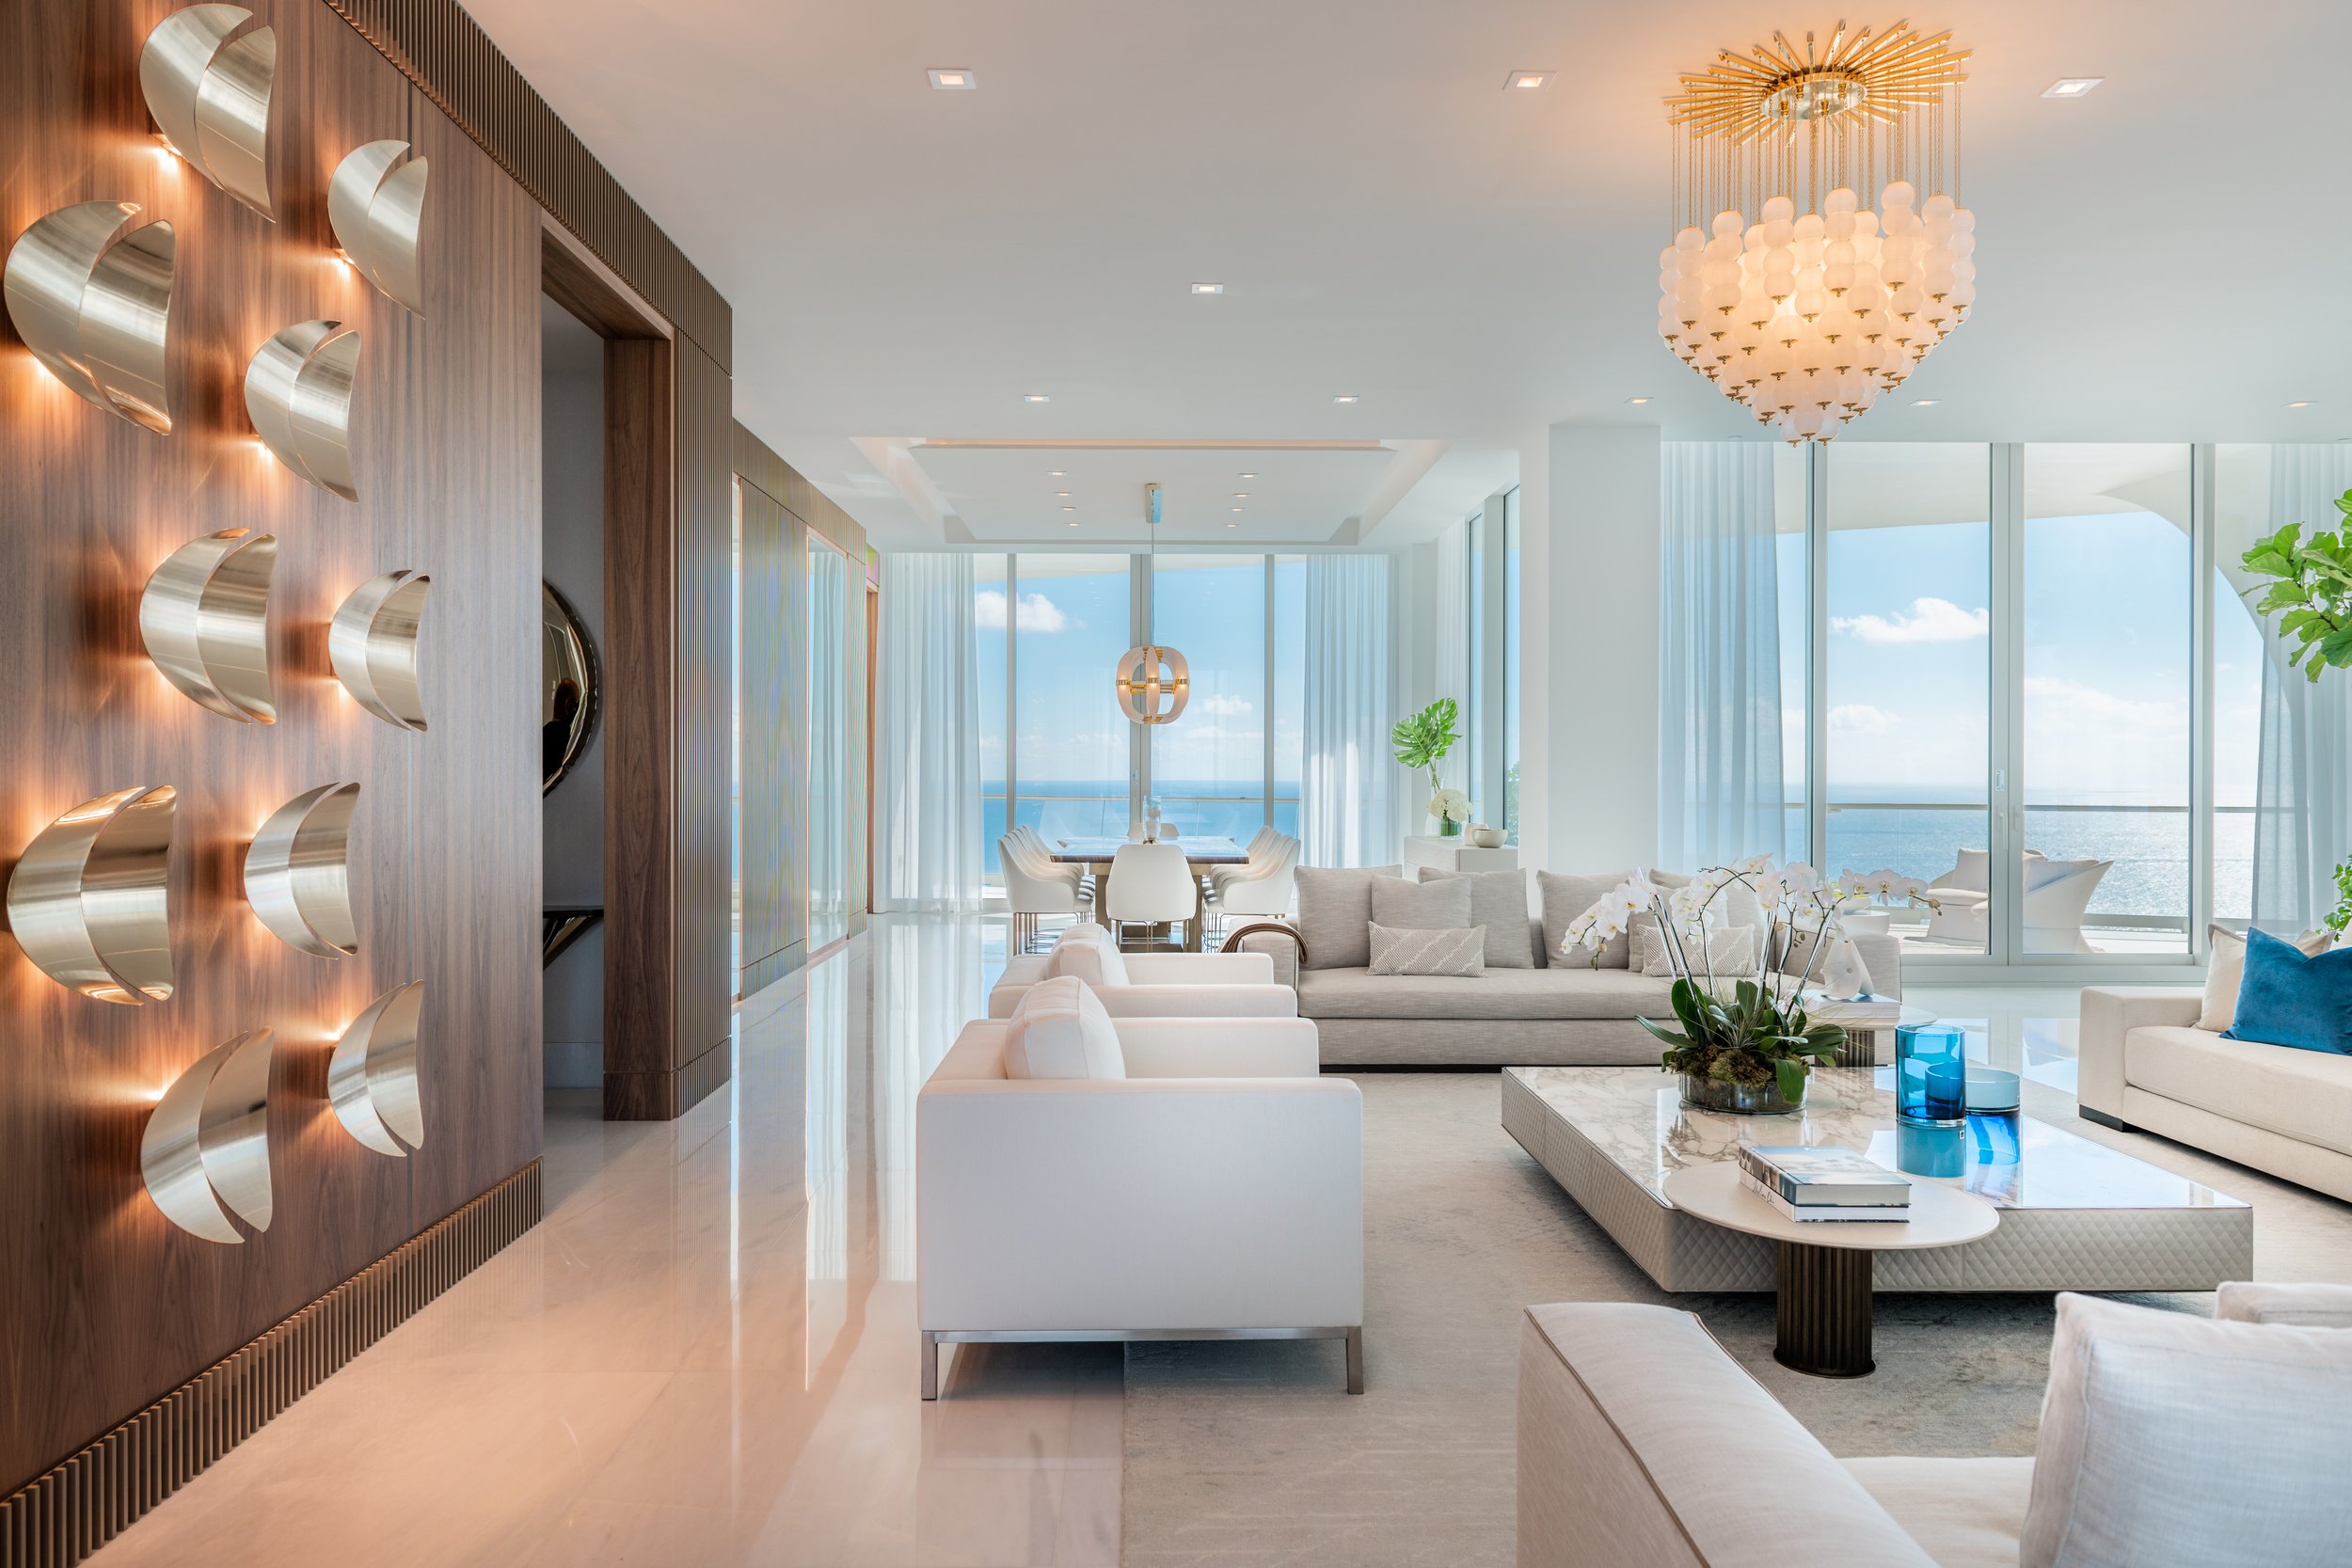 Billionaire Entrepreneur Buys $23.5 Million Penthouse Through Social Media at Jade Signature27.jpg